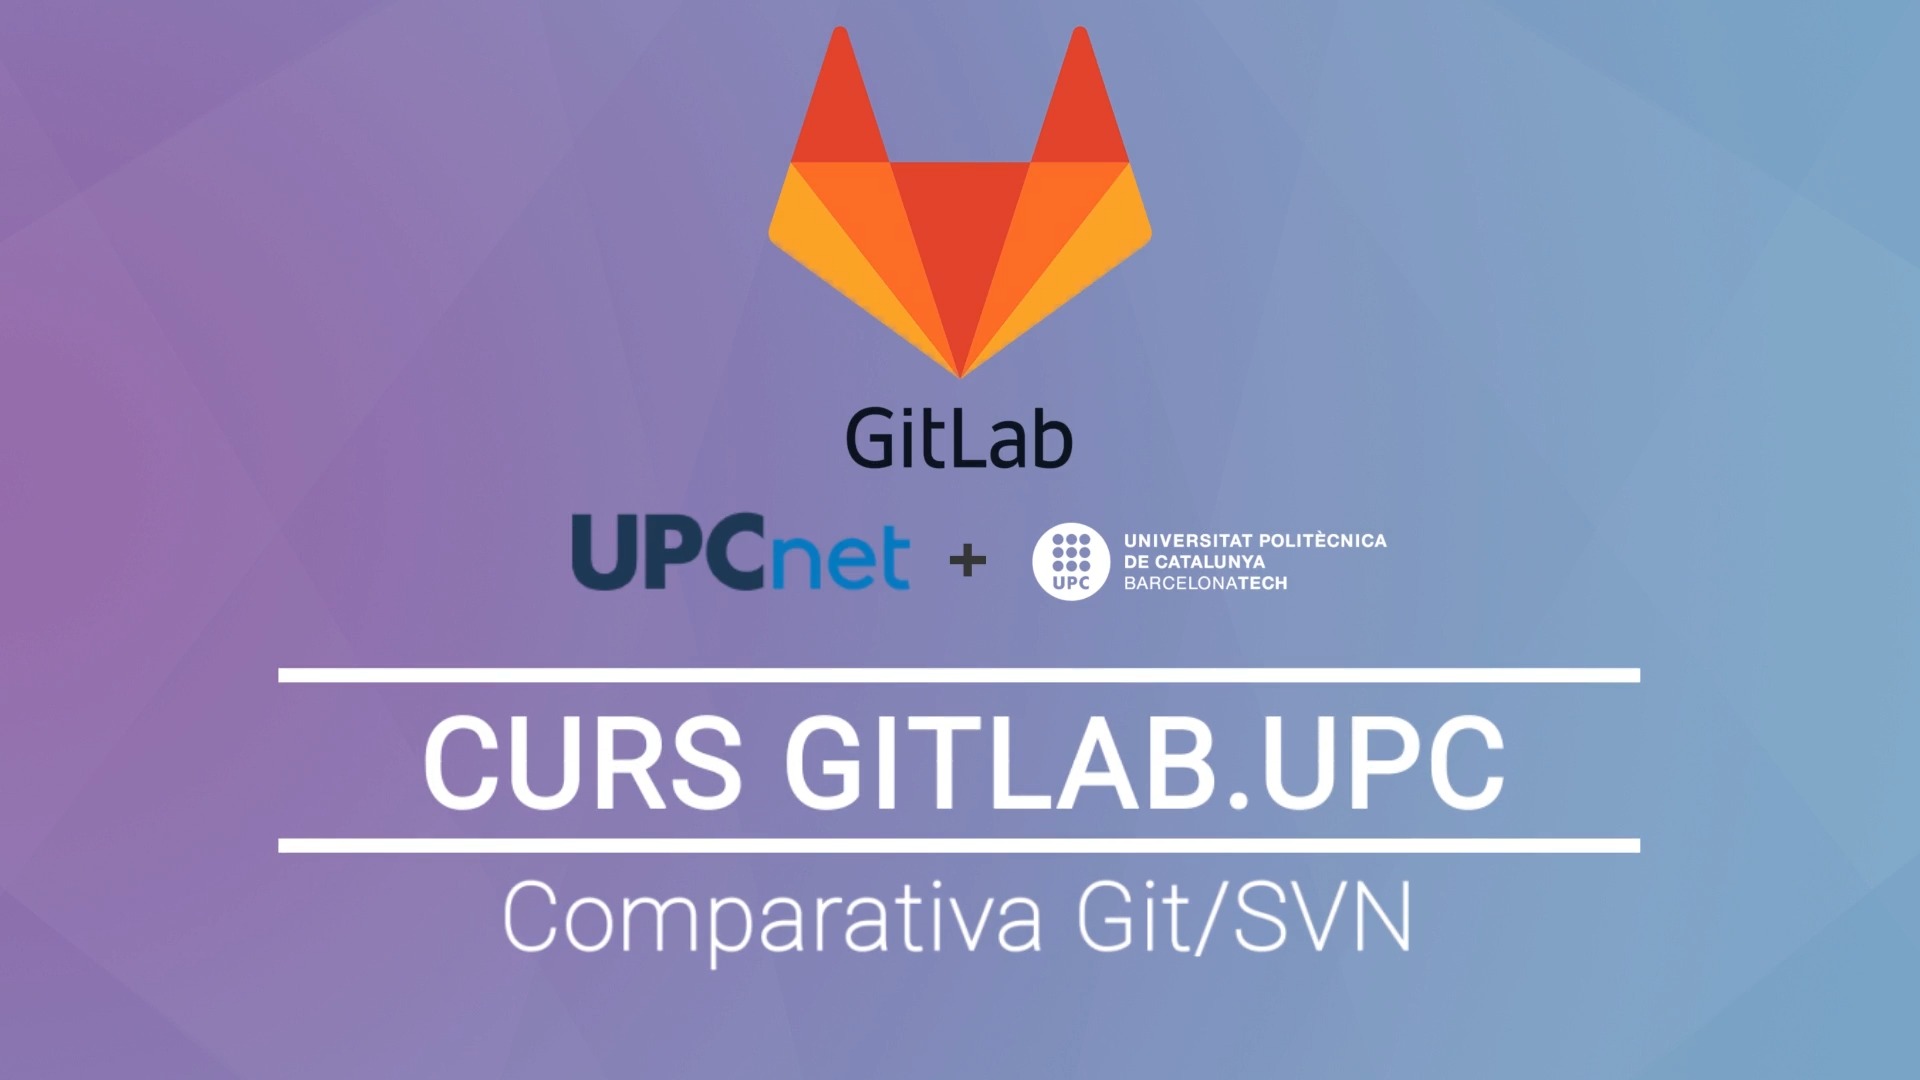 Curs GitLab. UPC - Comparativa